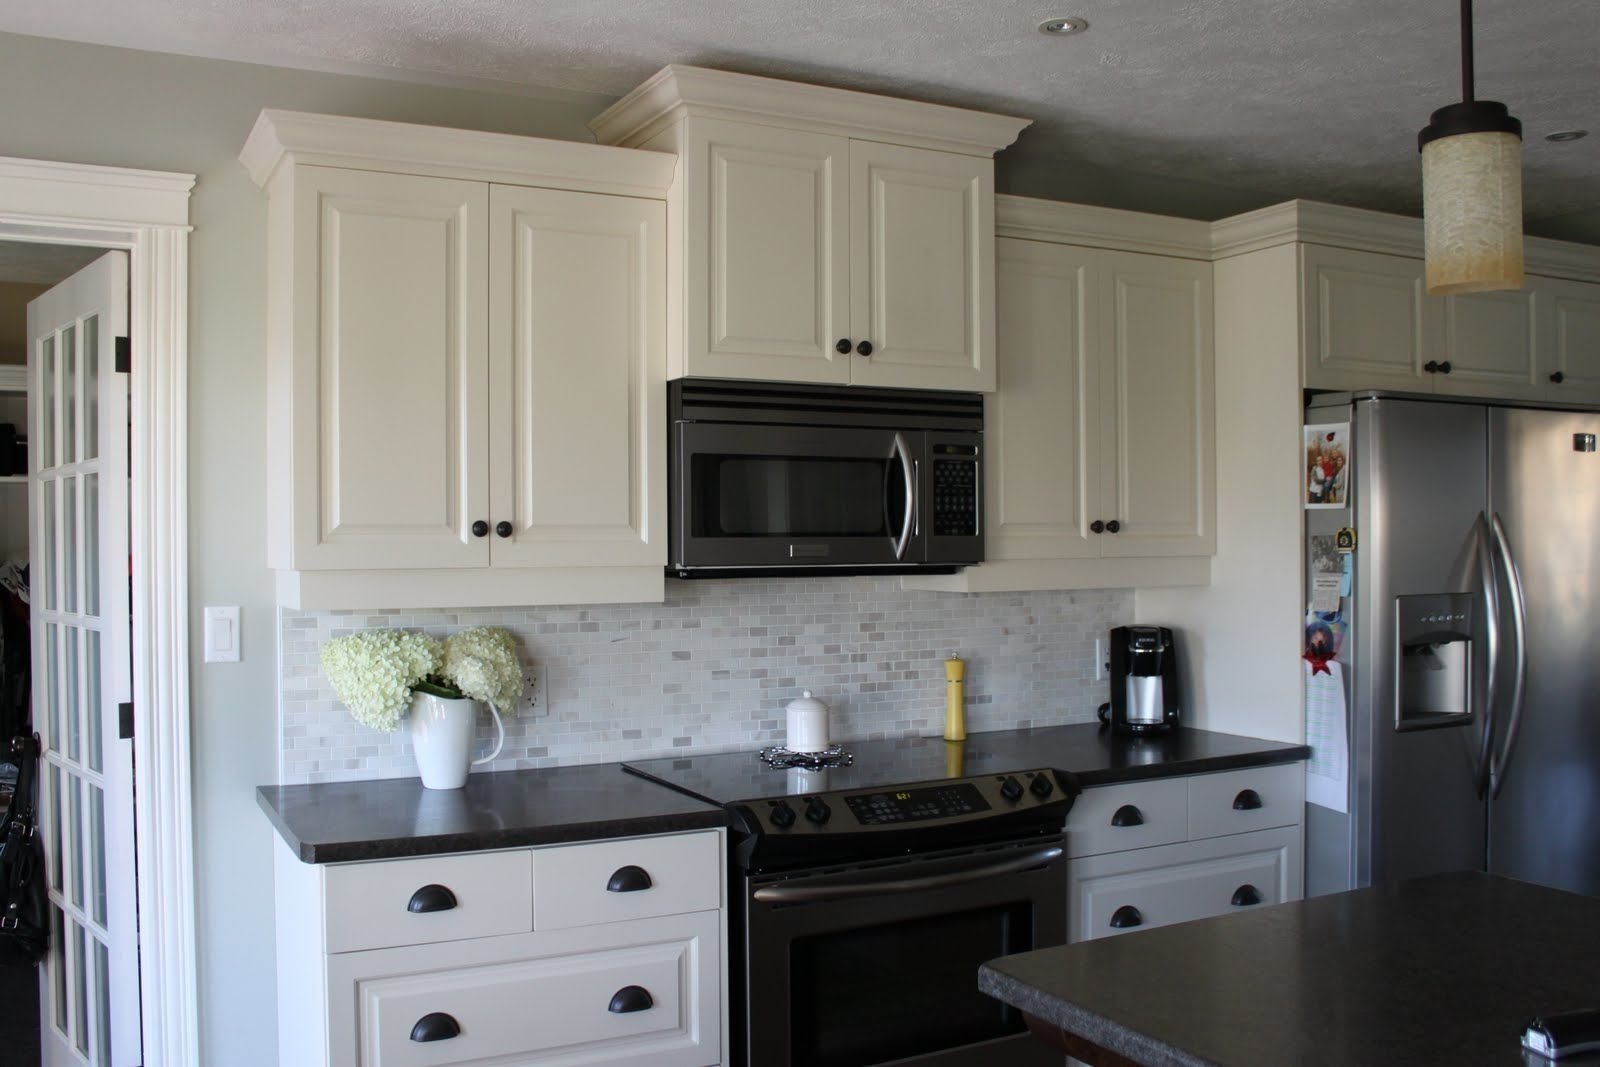 10 Trendy Backsplash Ideas For Kitchen With White Cabinets white cabinets with gray backsplash kitchen ideas pinterest 2023